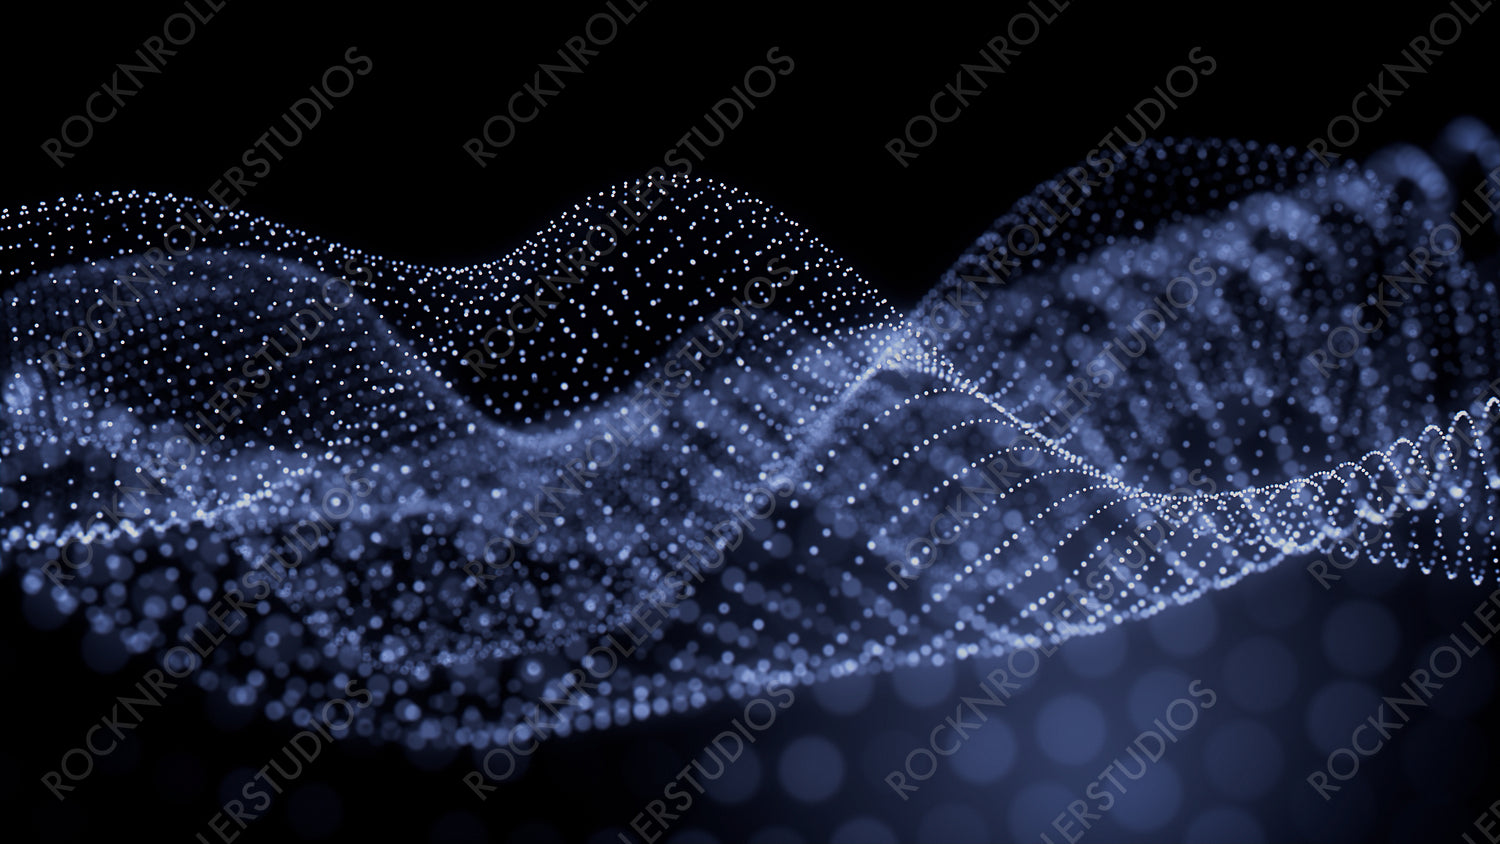 Smart Grid and Communication Concept. Blue, Futuristic Digital Style. 3D Render.